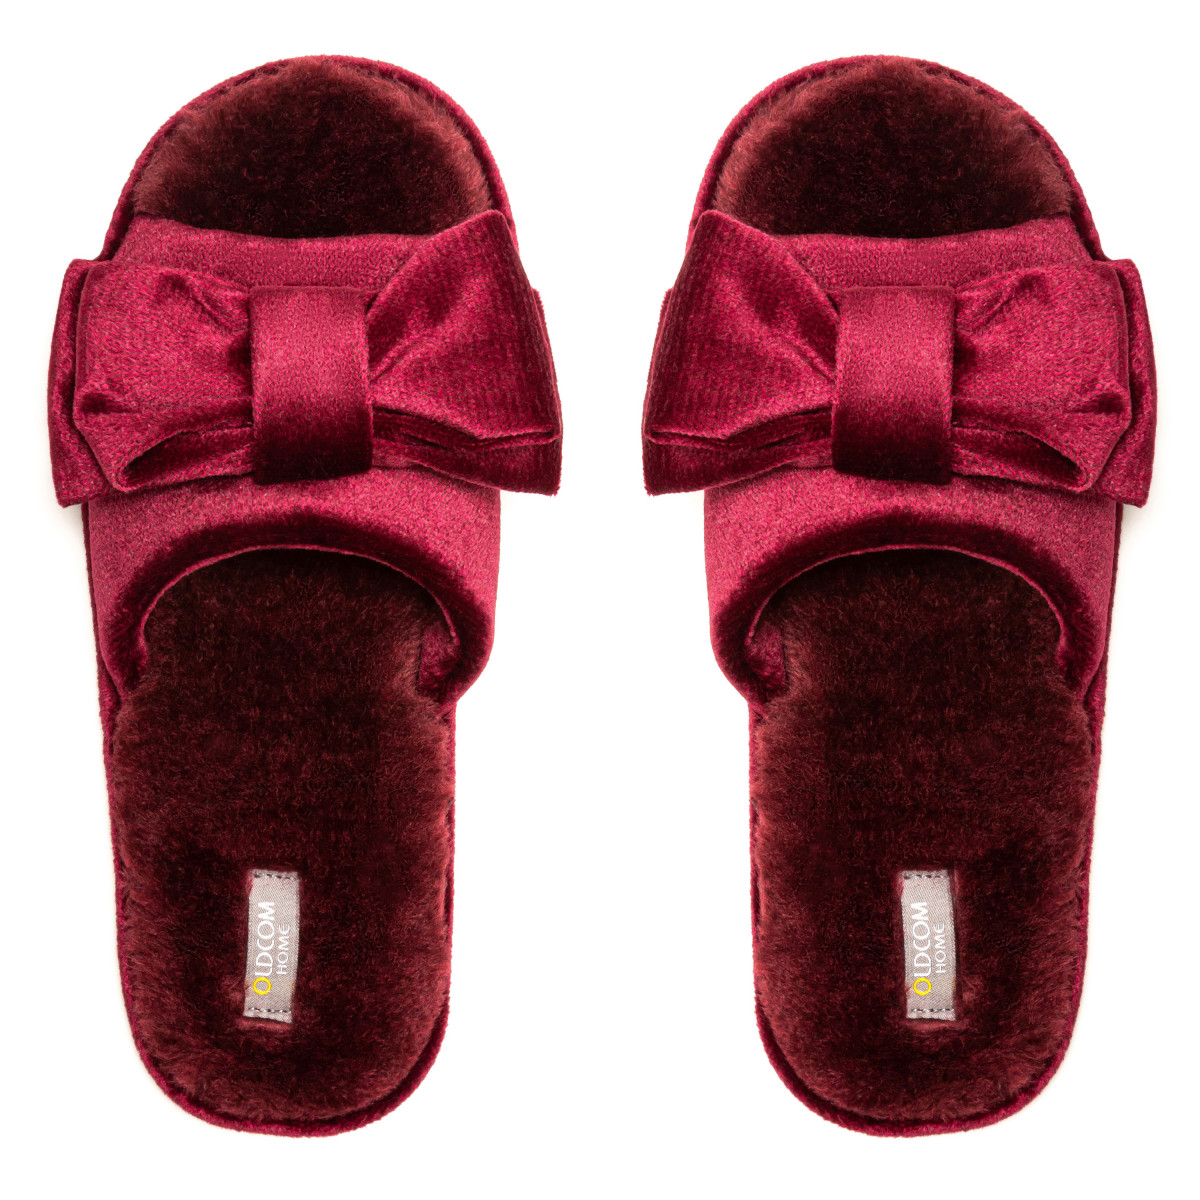 Women's Home slippers CHARM, Burgundy